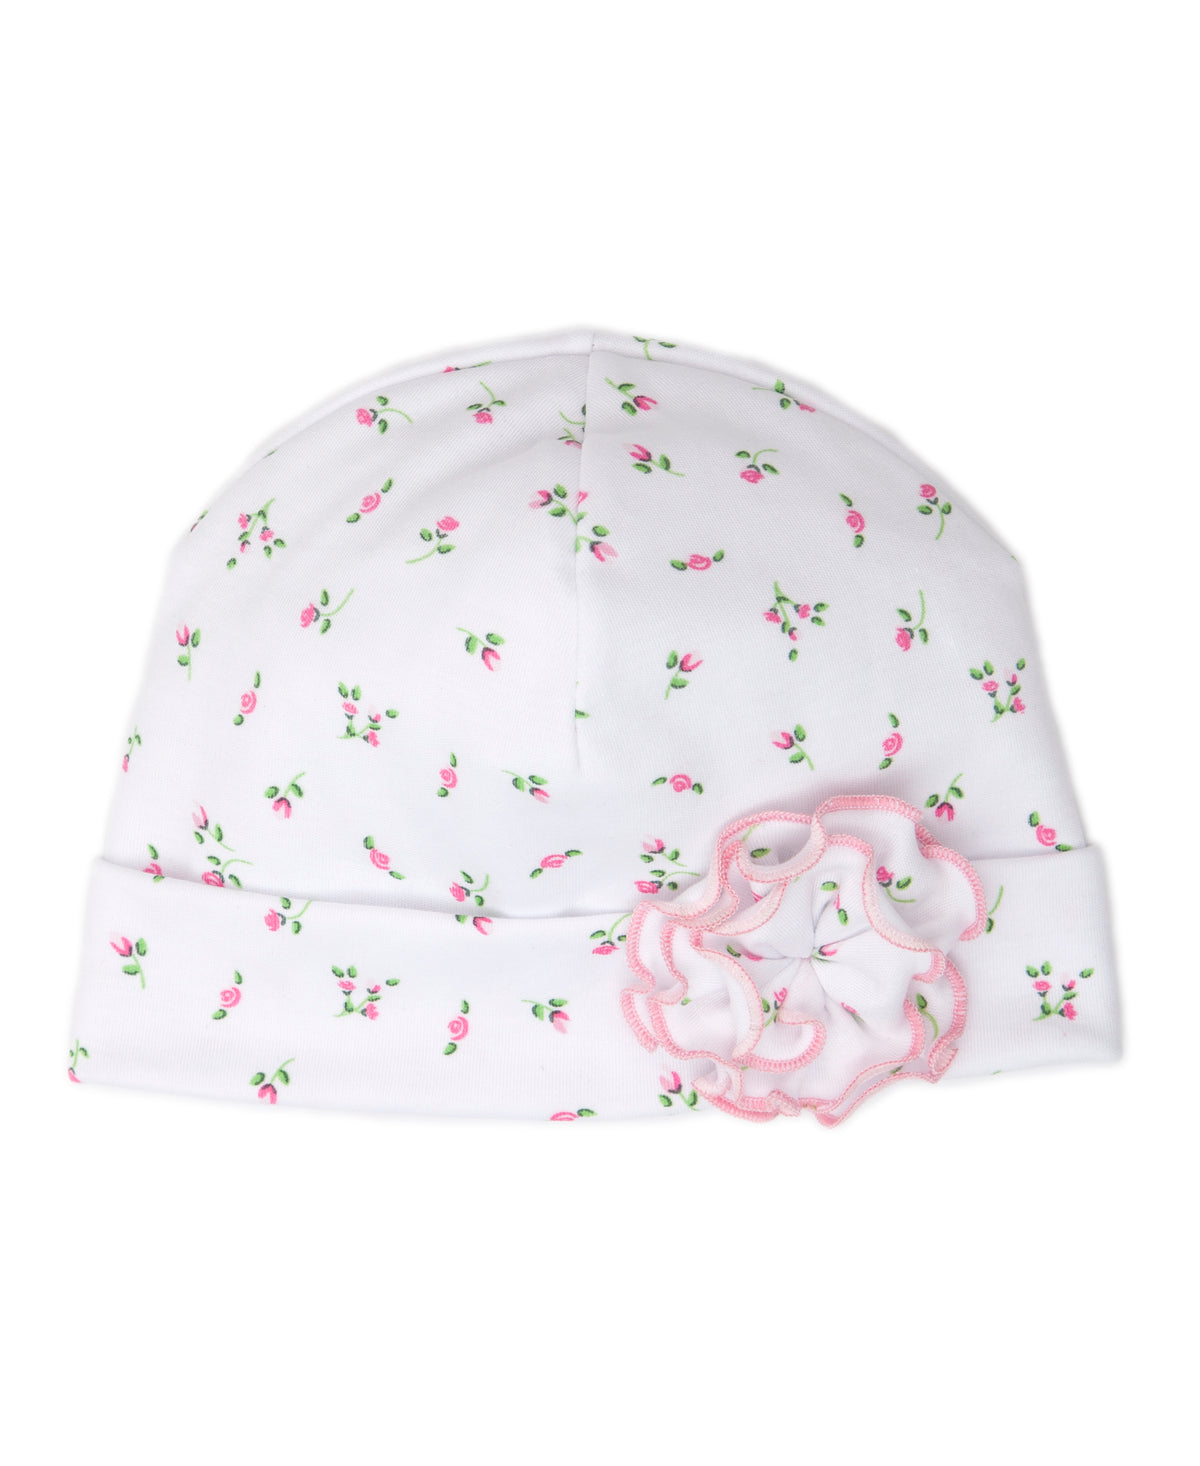 Garden Rose Print Gown, Blanket & Hat Set